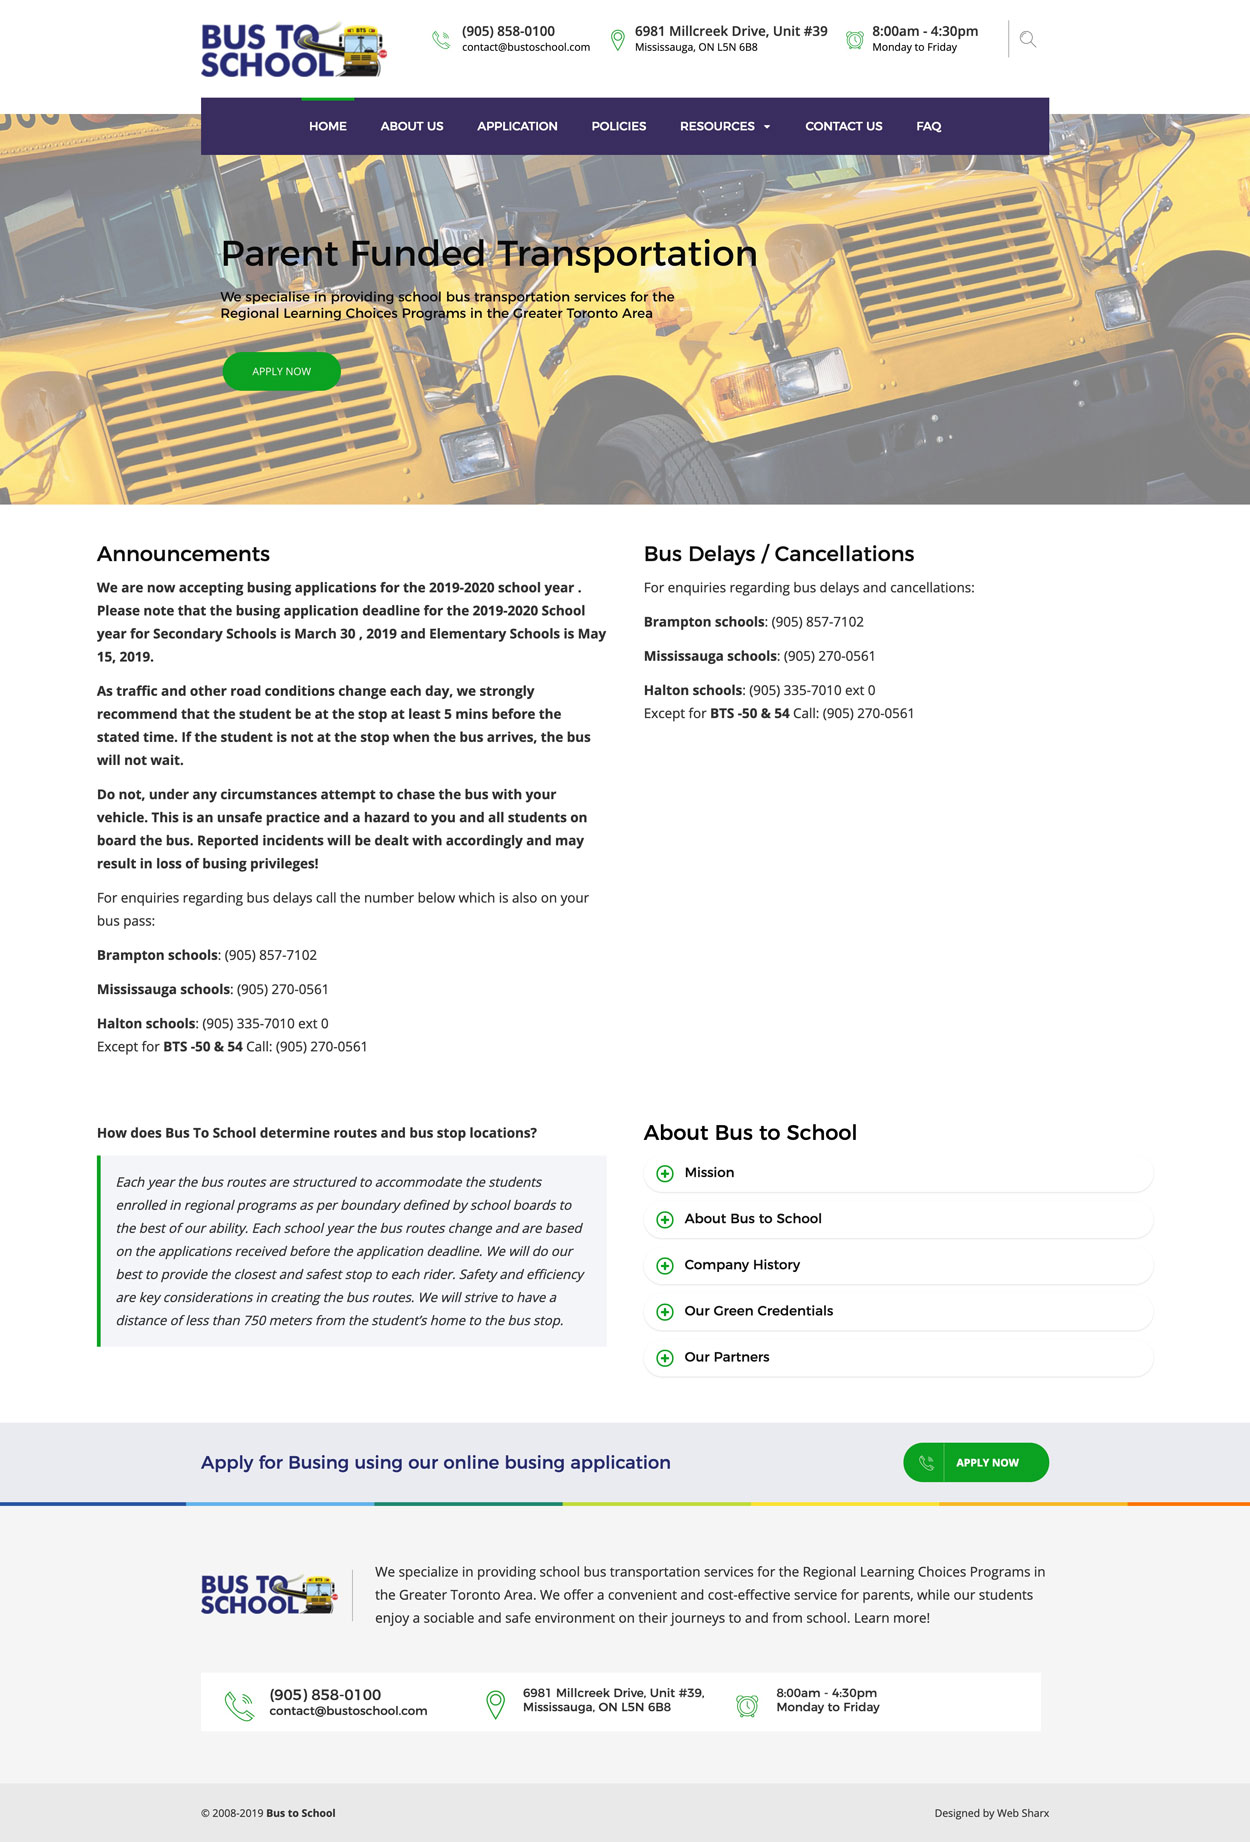 bustoschool-busing-company-web-design